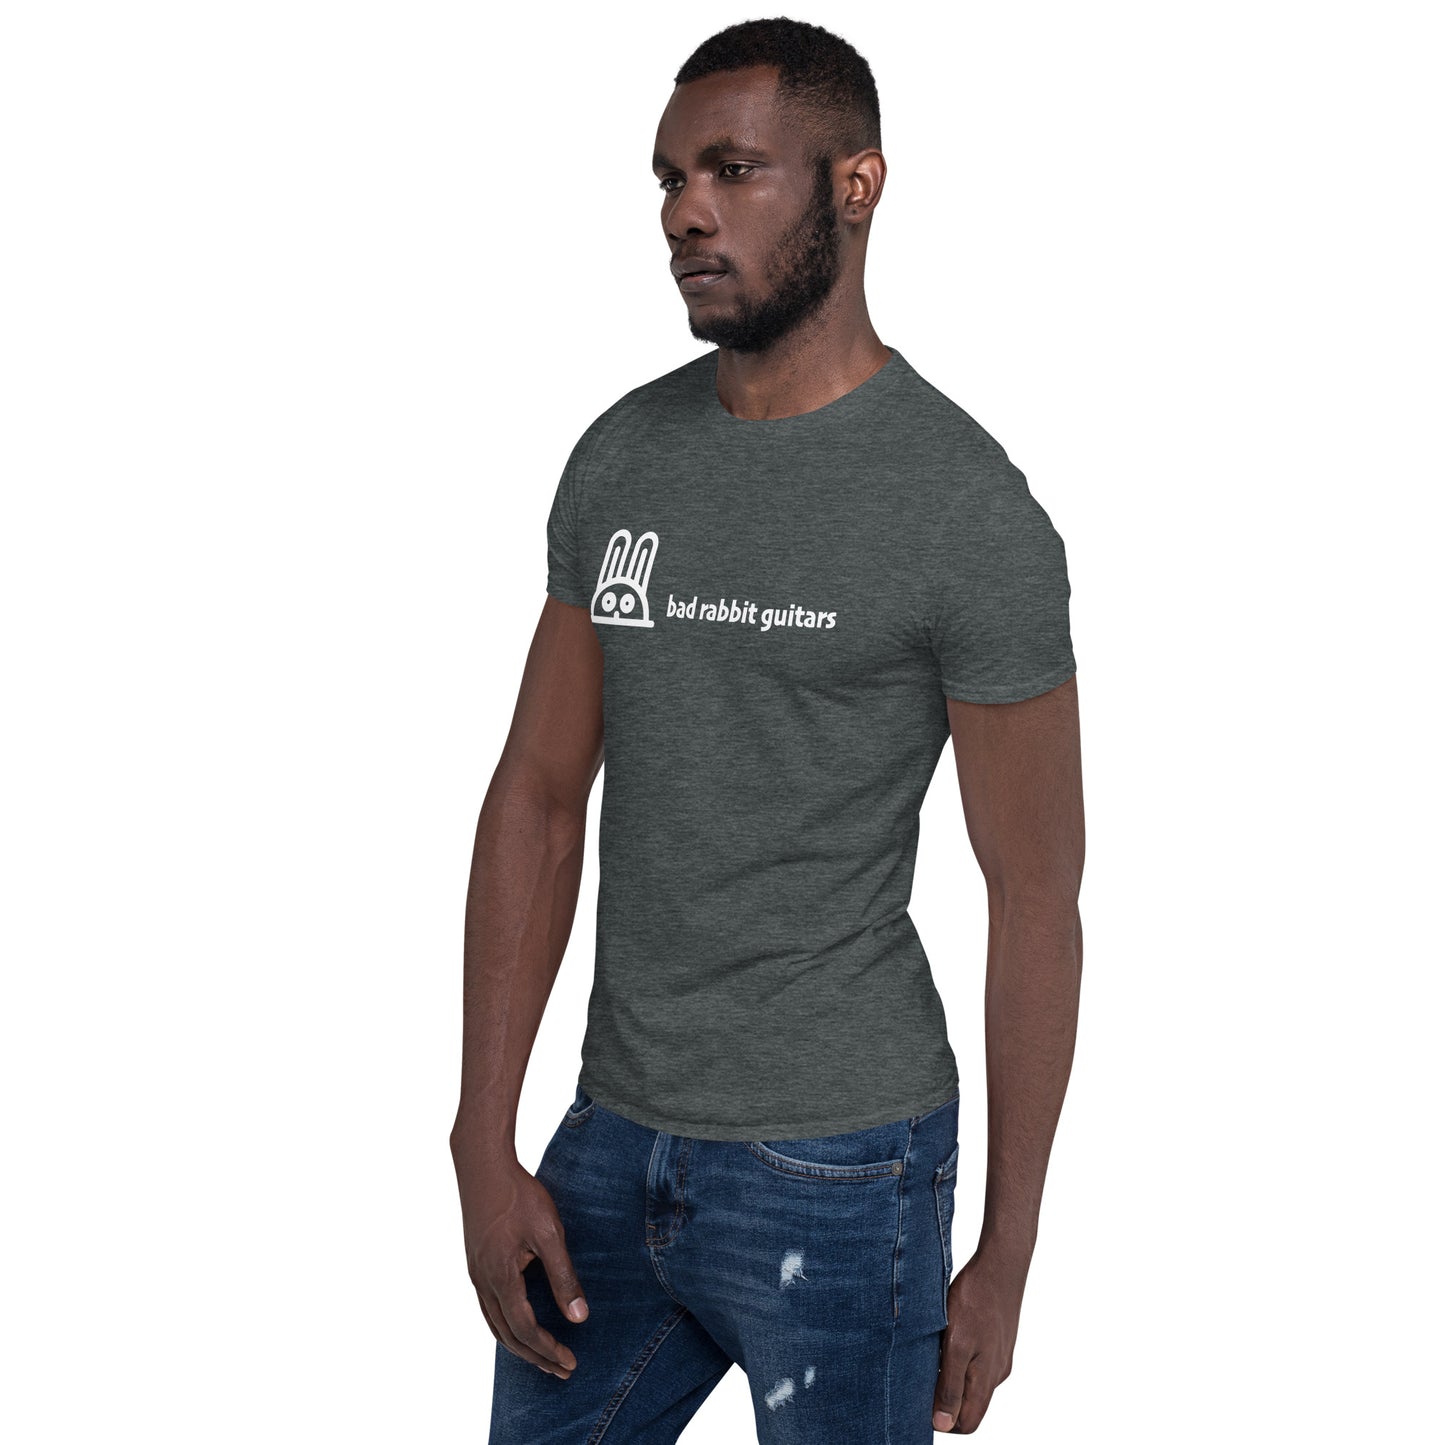 Unisex Soft-Style T-Shirt (Sport Grey) with larger logo